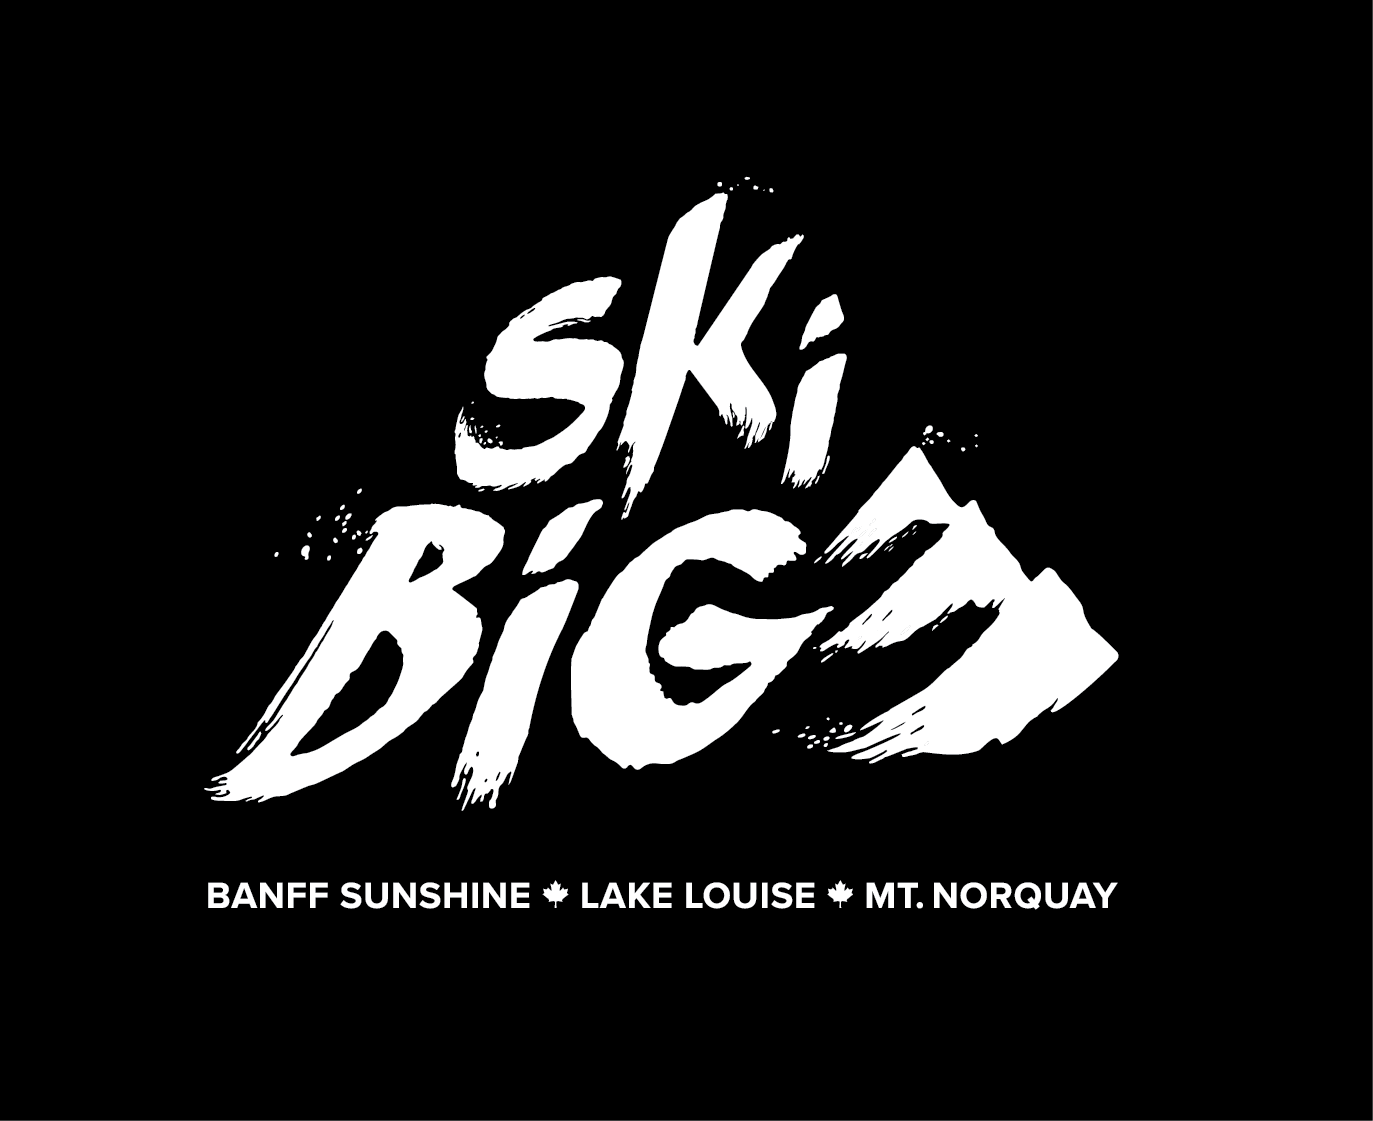 Ski Big 3 Logo Banff National Park; Banff Sunshine, the Lake Louise Ski Resort, and Mt Norquay